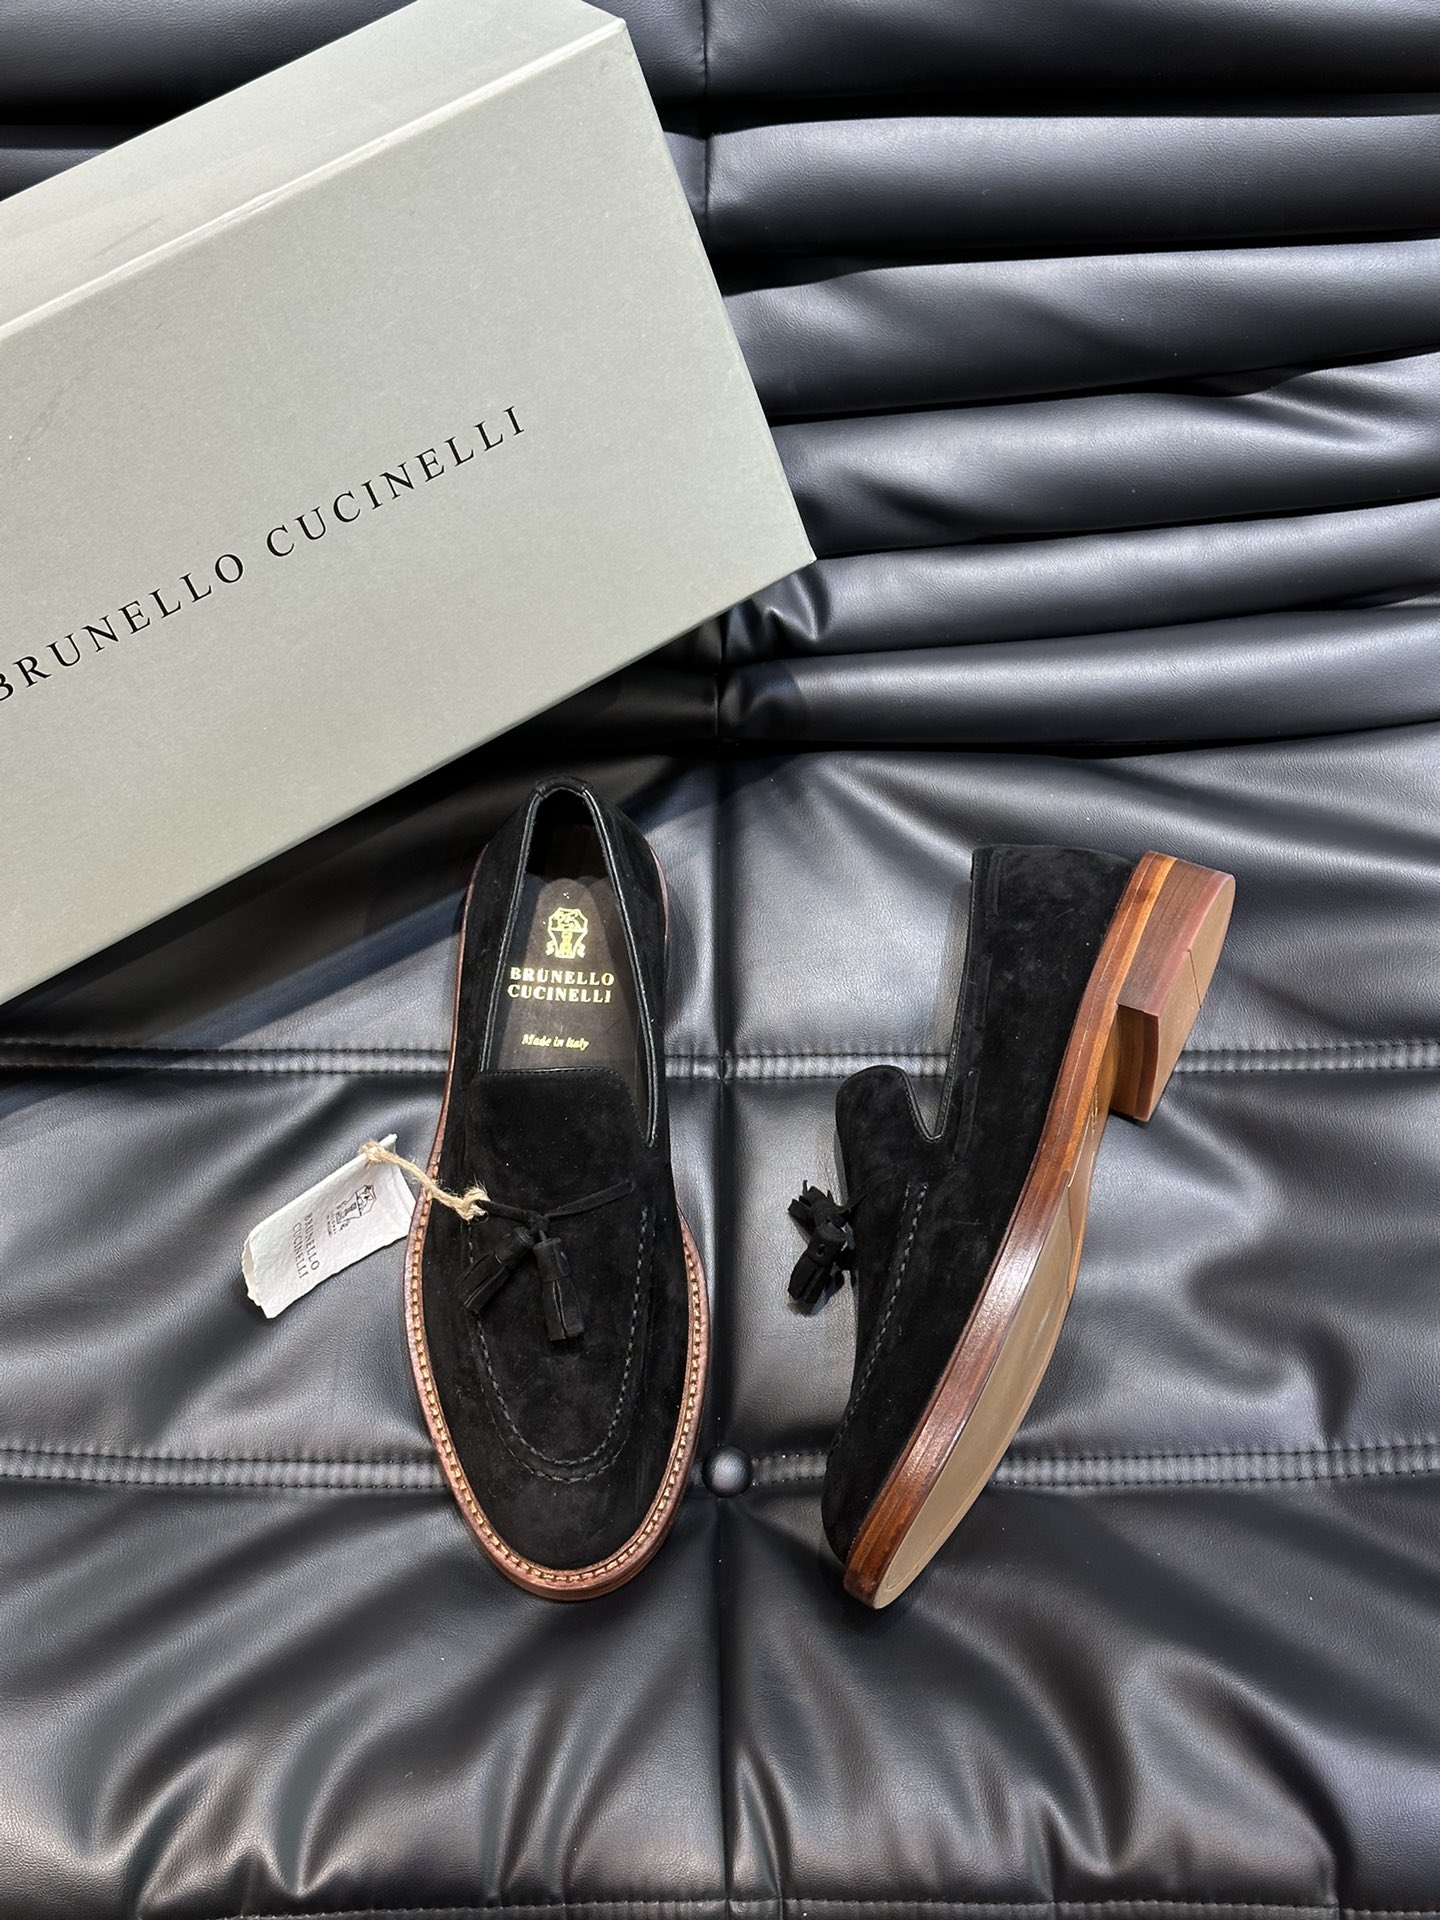 BrunelloCucinelli真皮大底皮鞋高端男士经典乐福鞋原版进口胎牛皮荔枝纹牛皮打造此款鞋型堪称